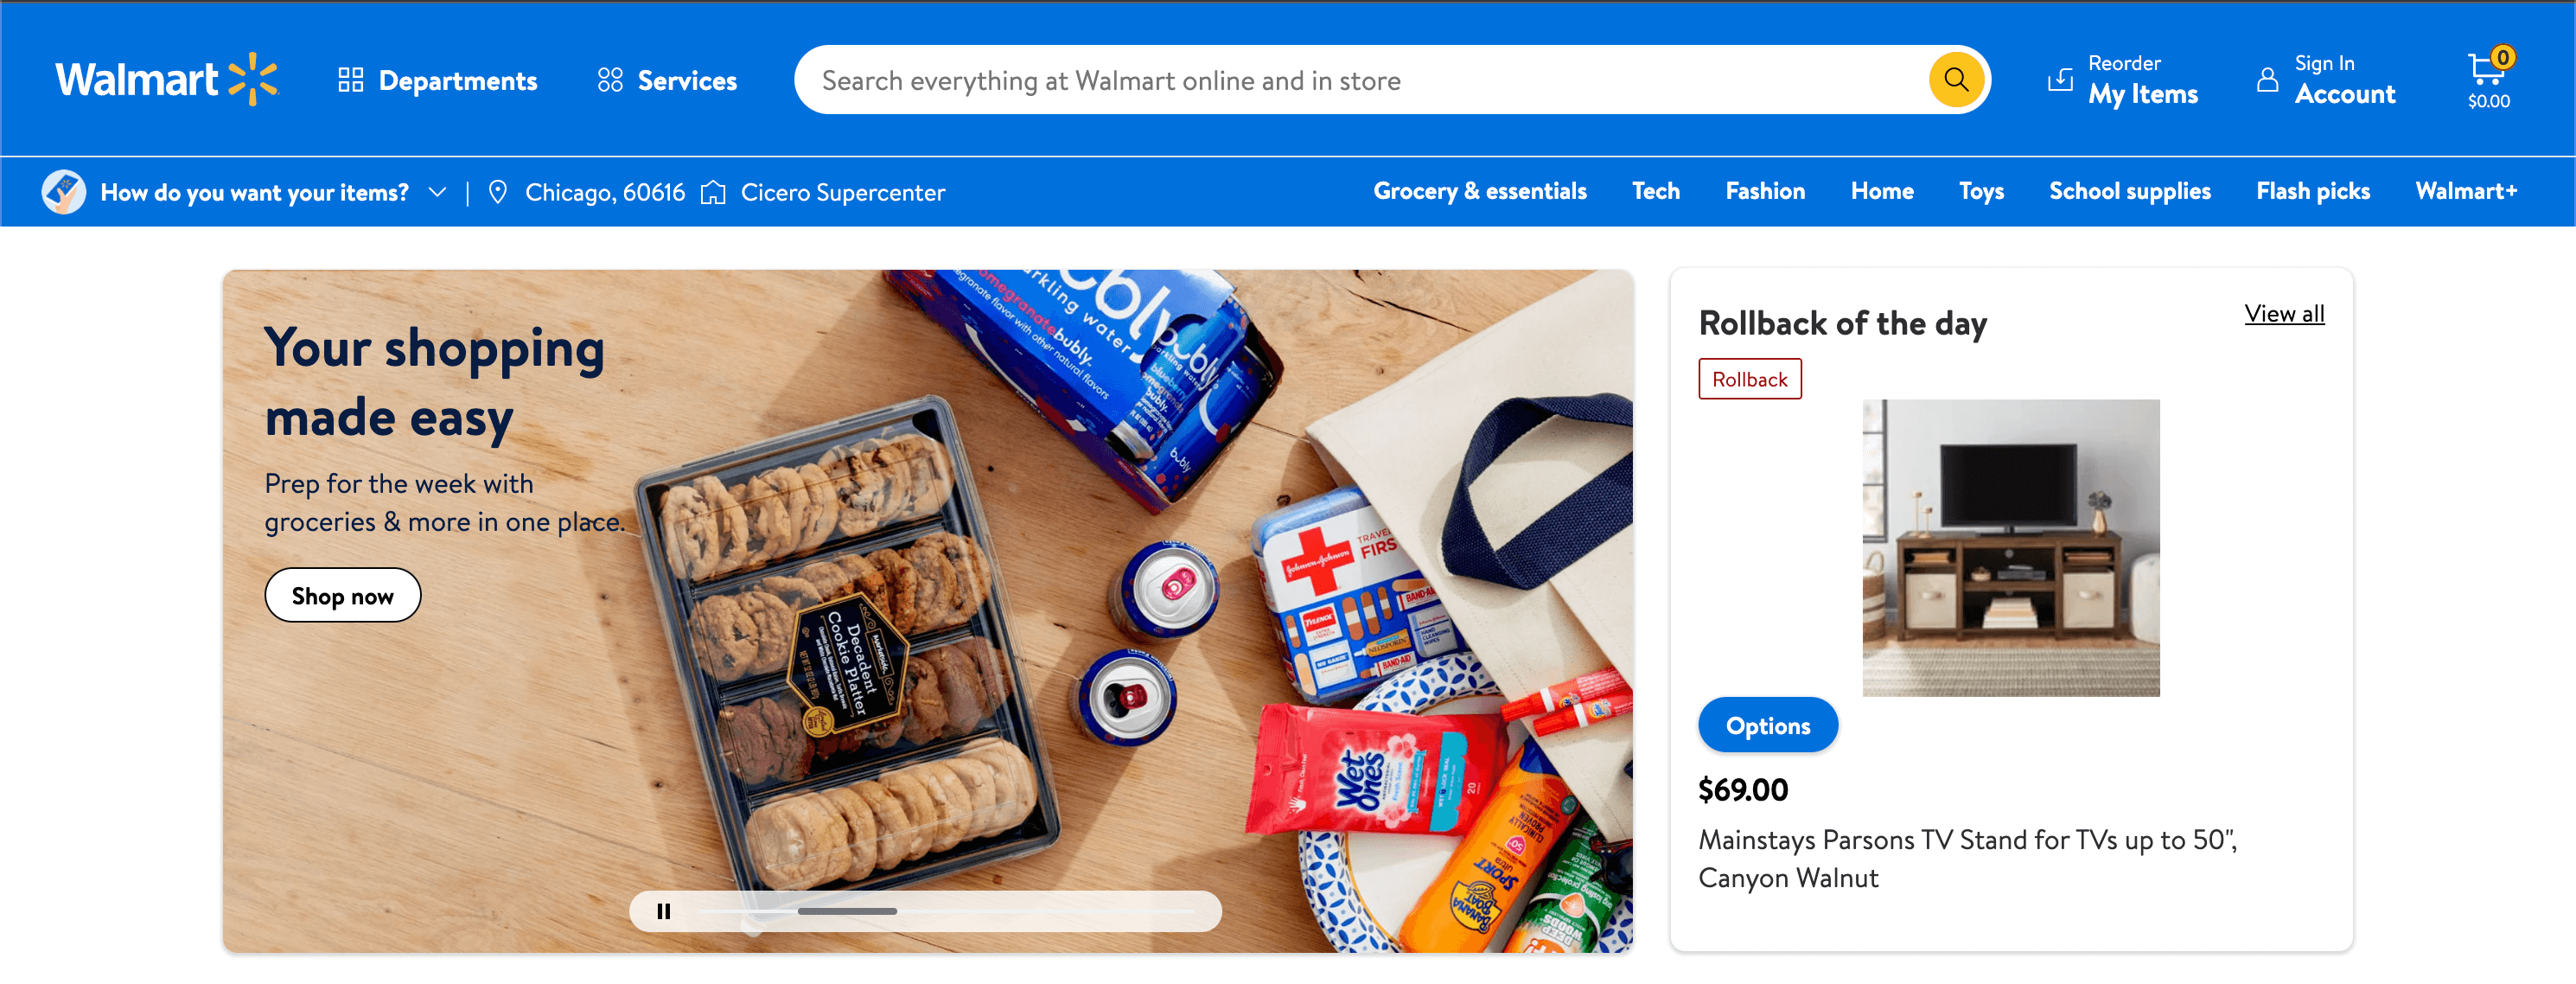 Walmart's home page